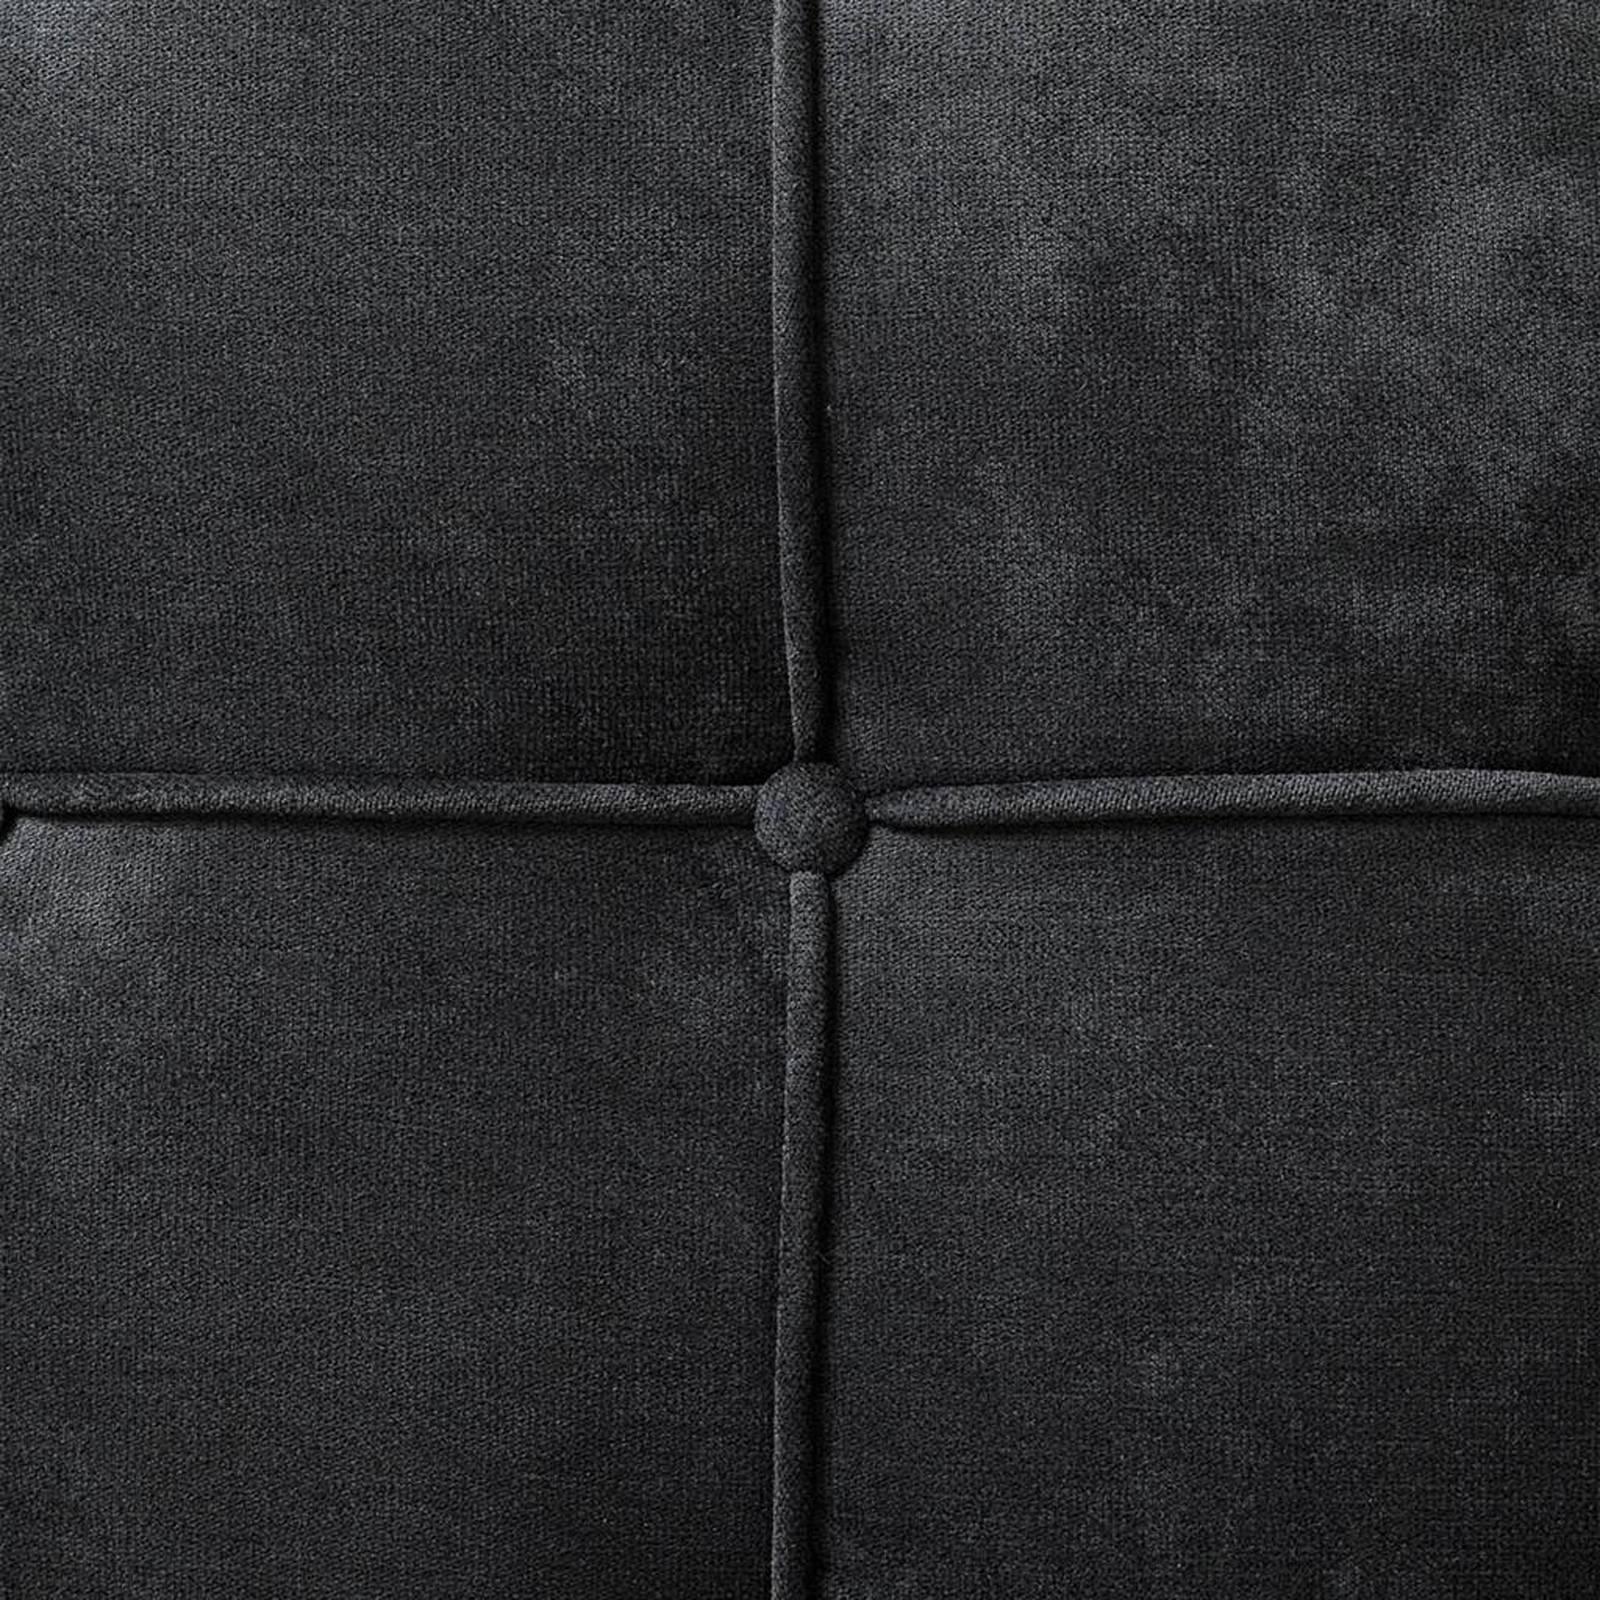 Chinese Sander Sofa in Black, Greige or Ecru Velvet Fabric